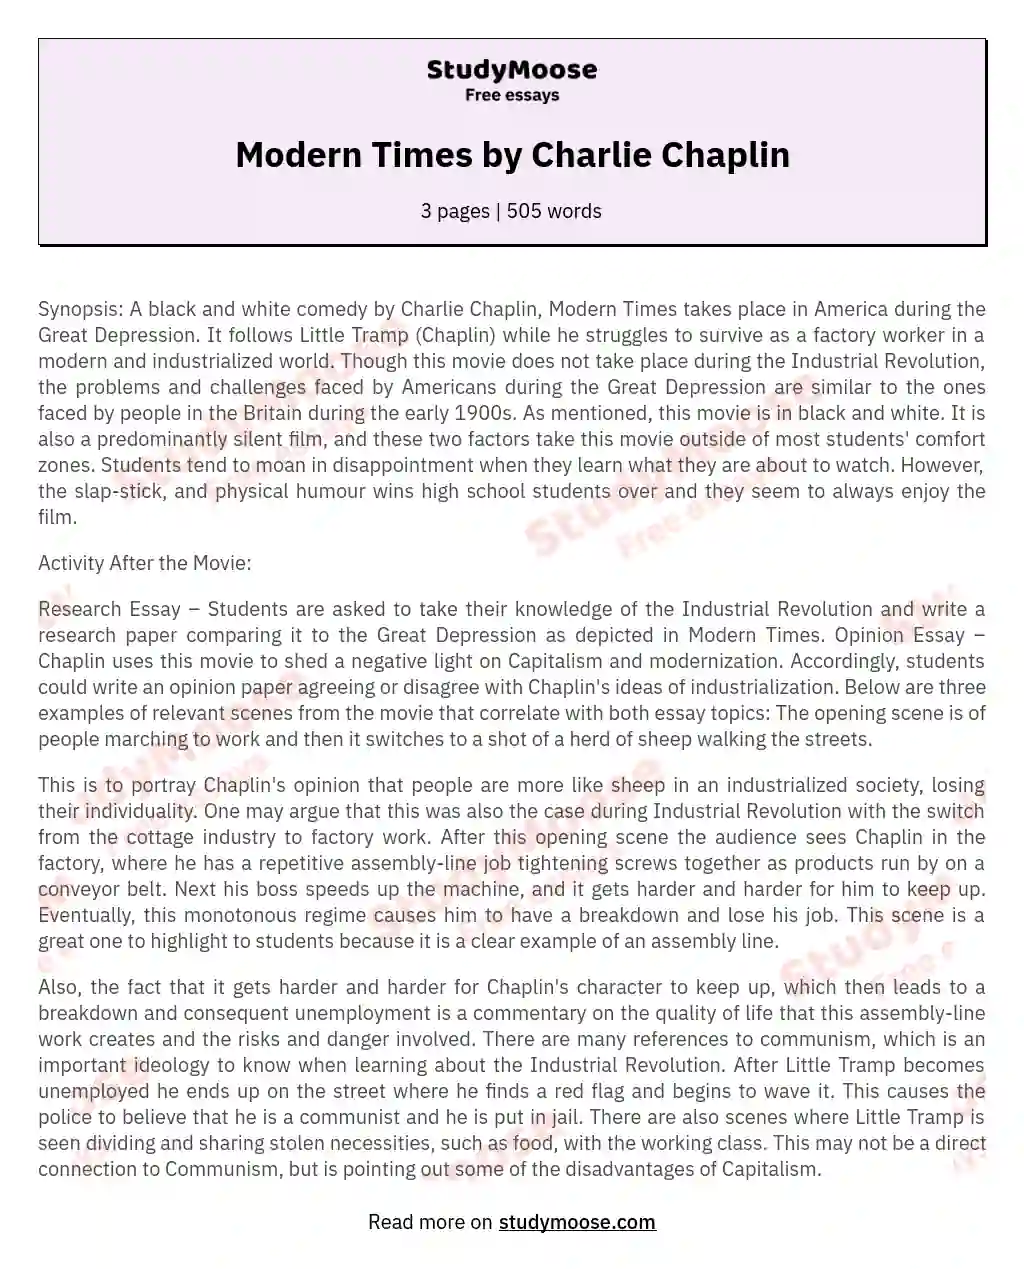 Modern Times by Charlie Chaplin essay